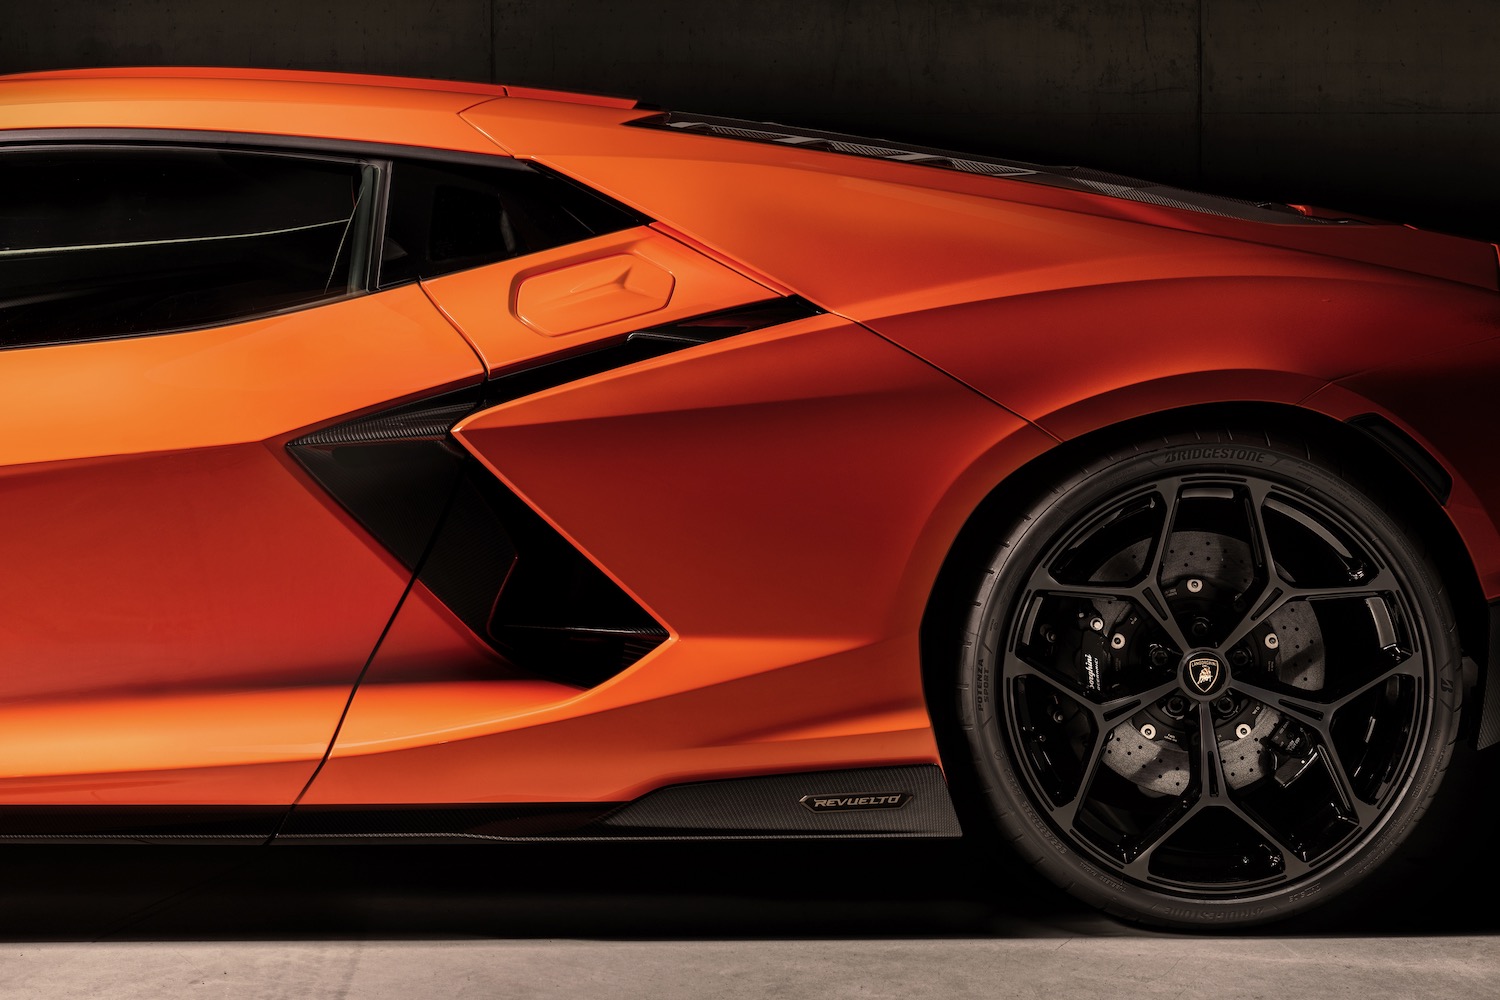 The Lamborghini Revuelto is a 1,001 horsepower hybrid supercar